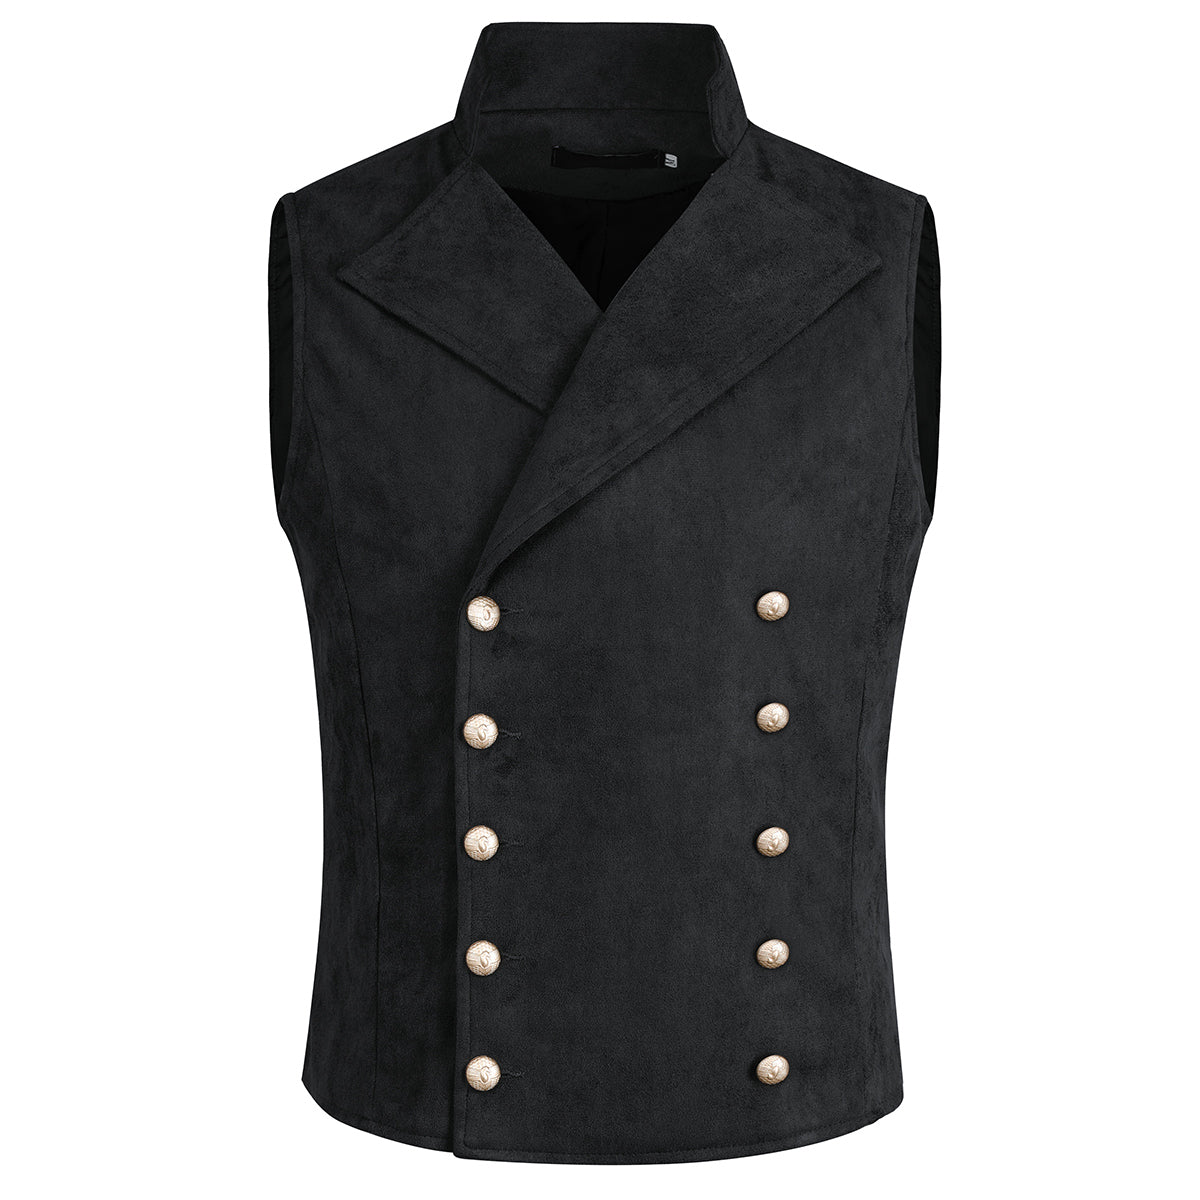 Double Breasted Velvet Gothic Steampunk Black Dress Vest